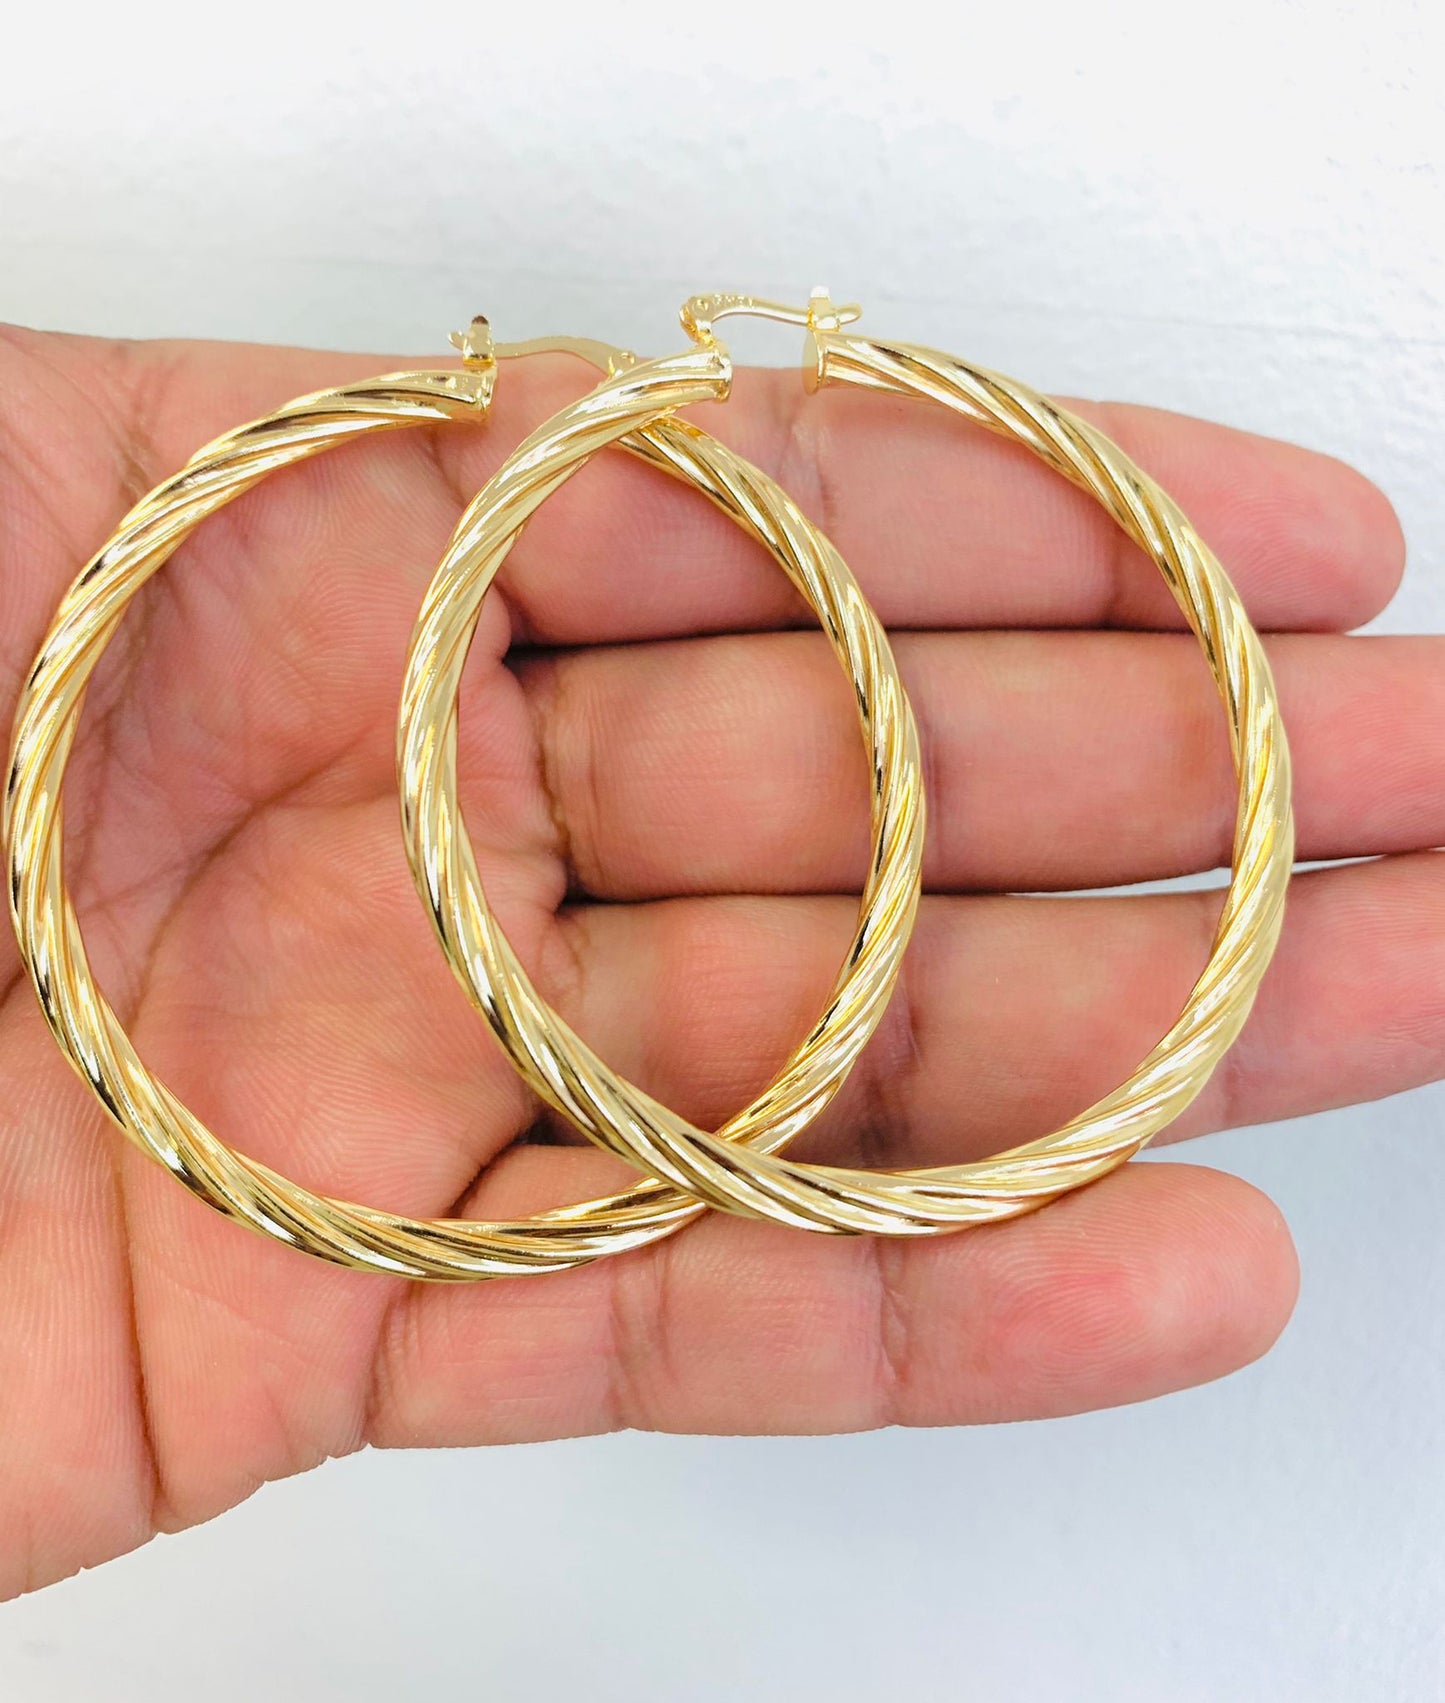 Gold Filled Hoop Earrings Lever Back Womens Earrings 2.76x2.6” 4mm 12.4g Twisted Hoop Earrings